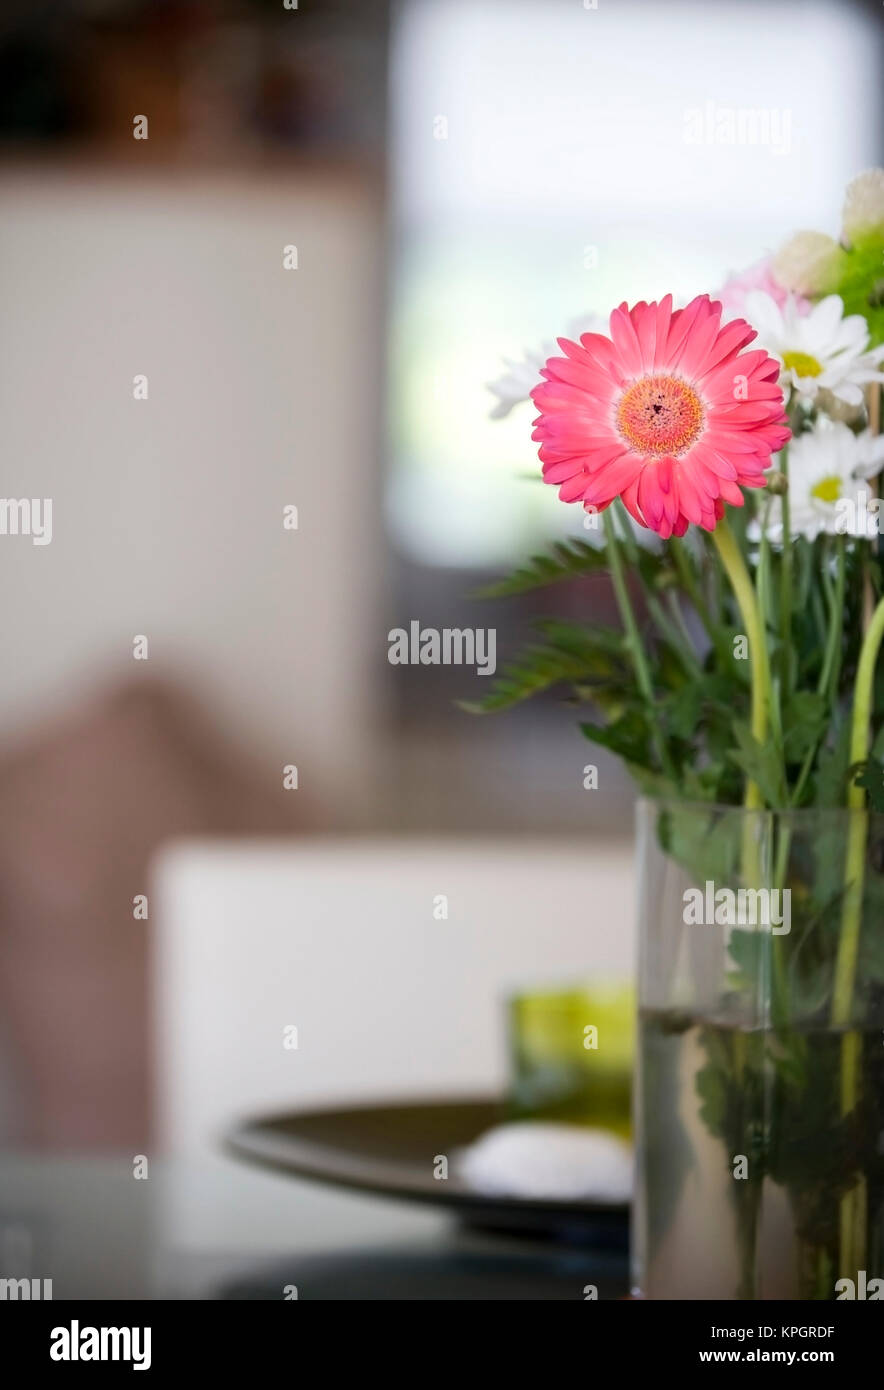 Blumenvase mit Gerbera im Wohnraum - flower vase with gerbera in living room Stock Photo